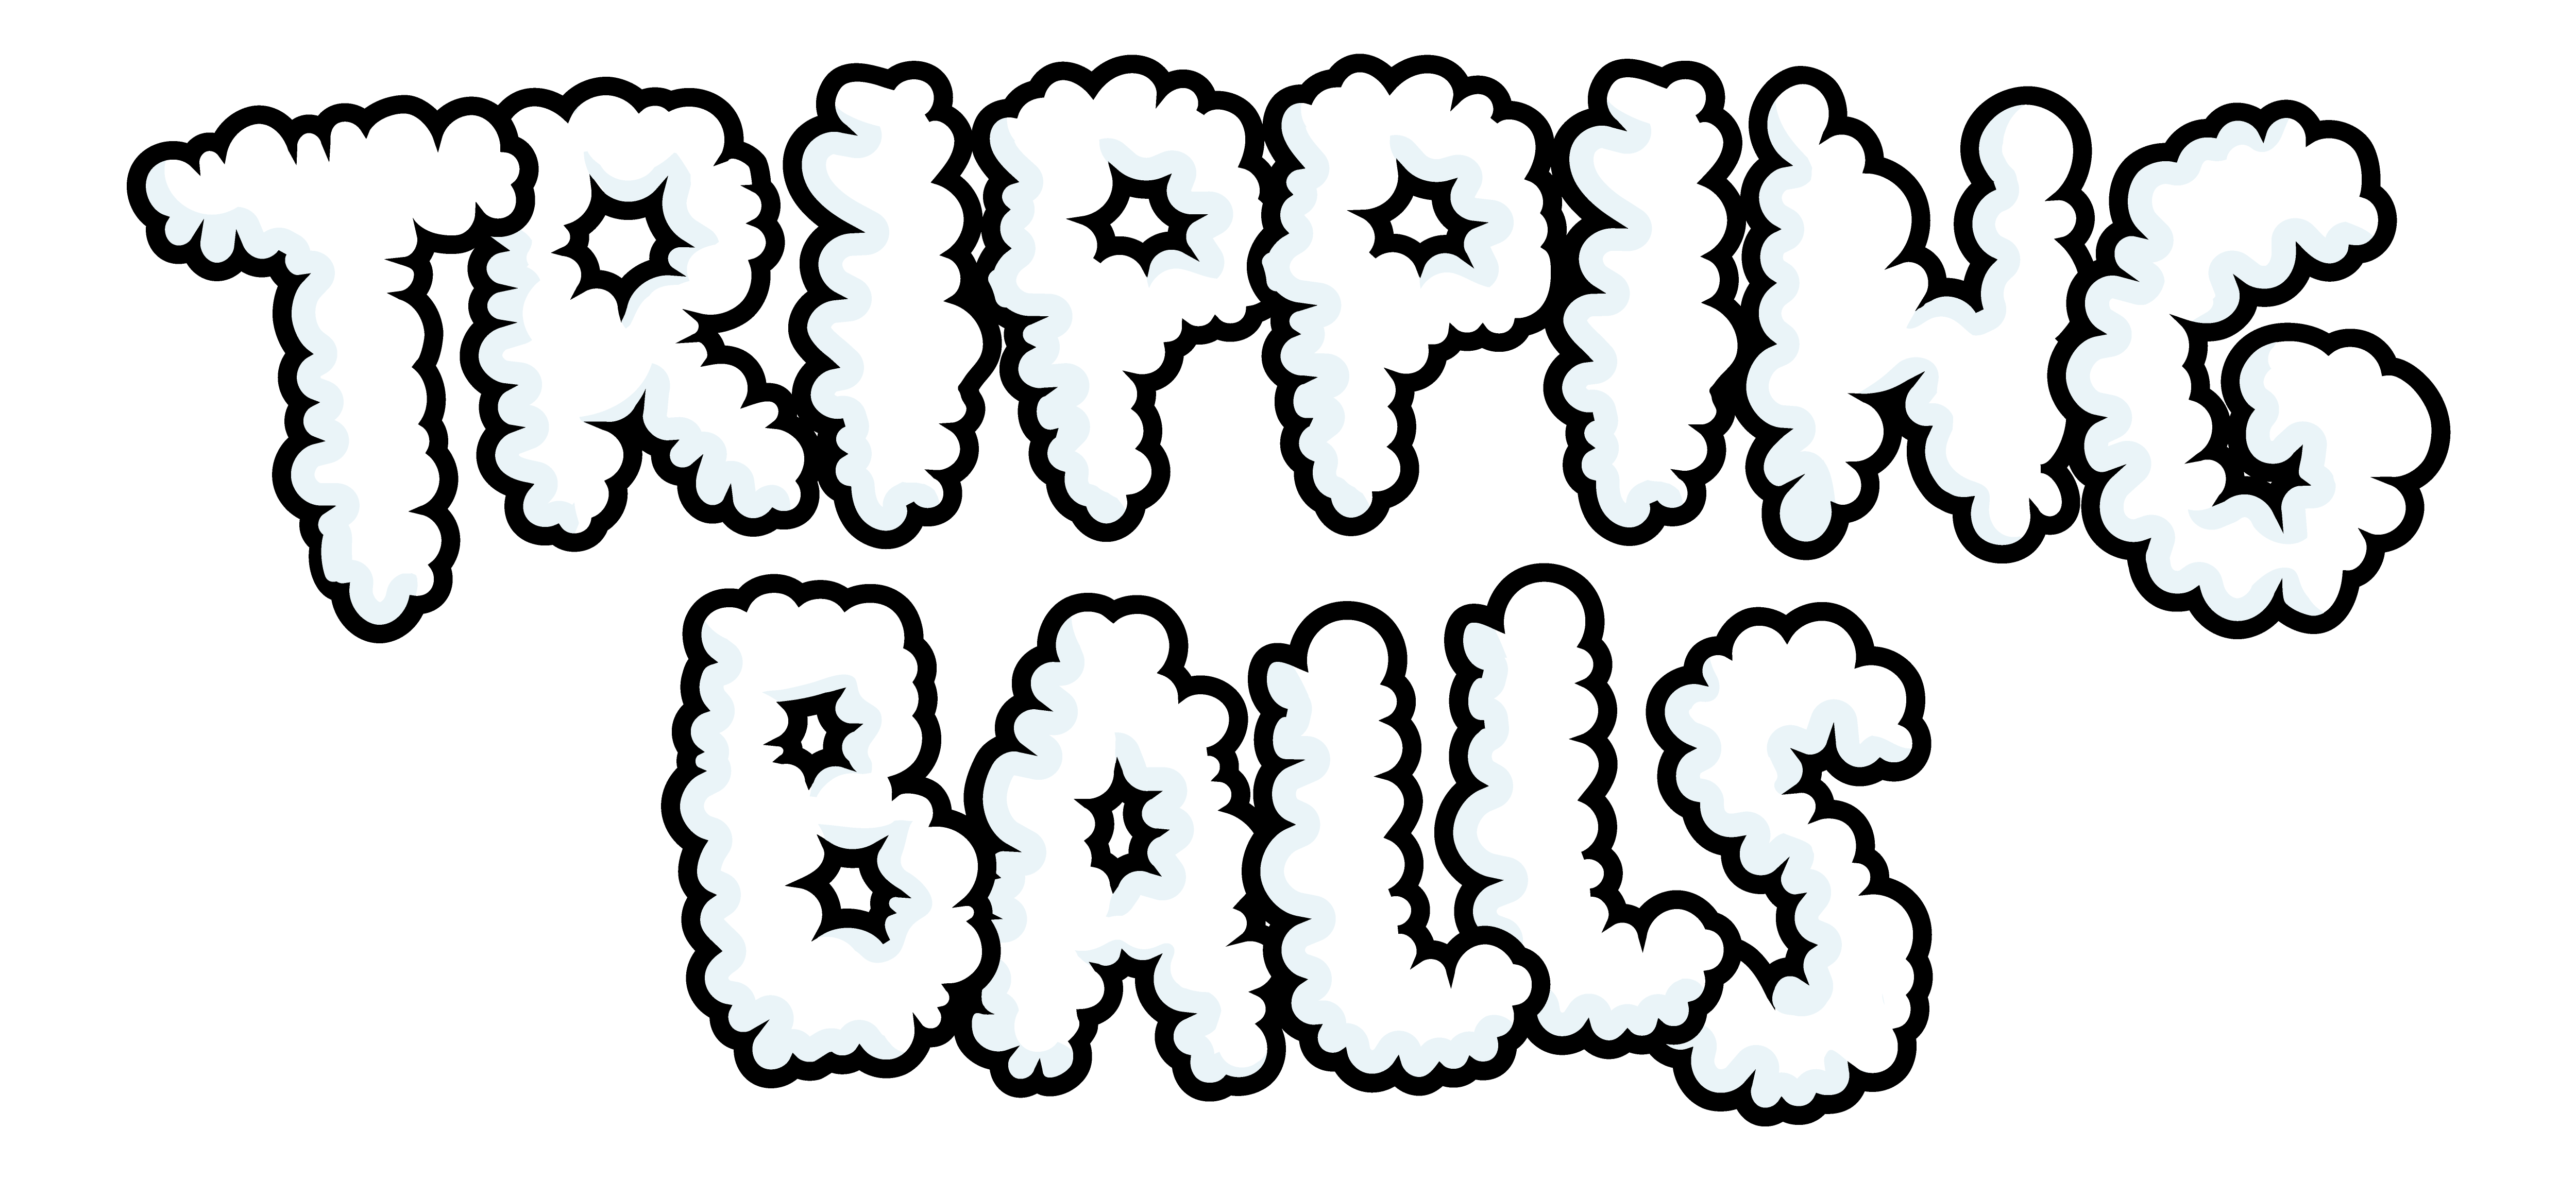 Tripping Balls Mushrooms